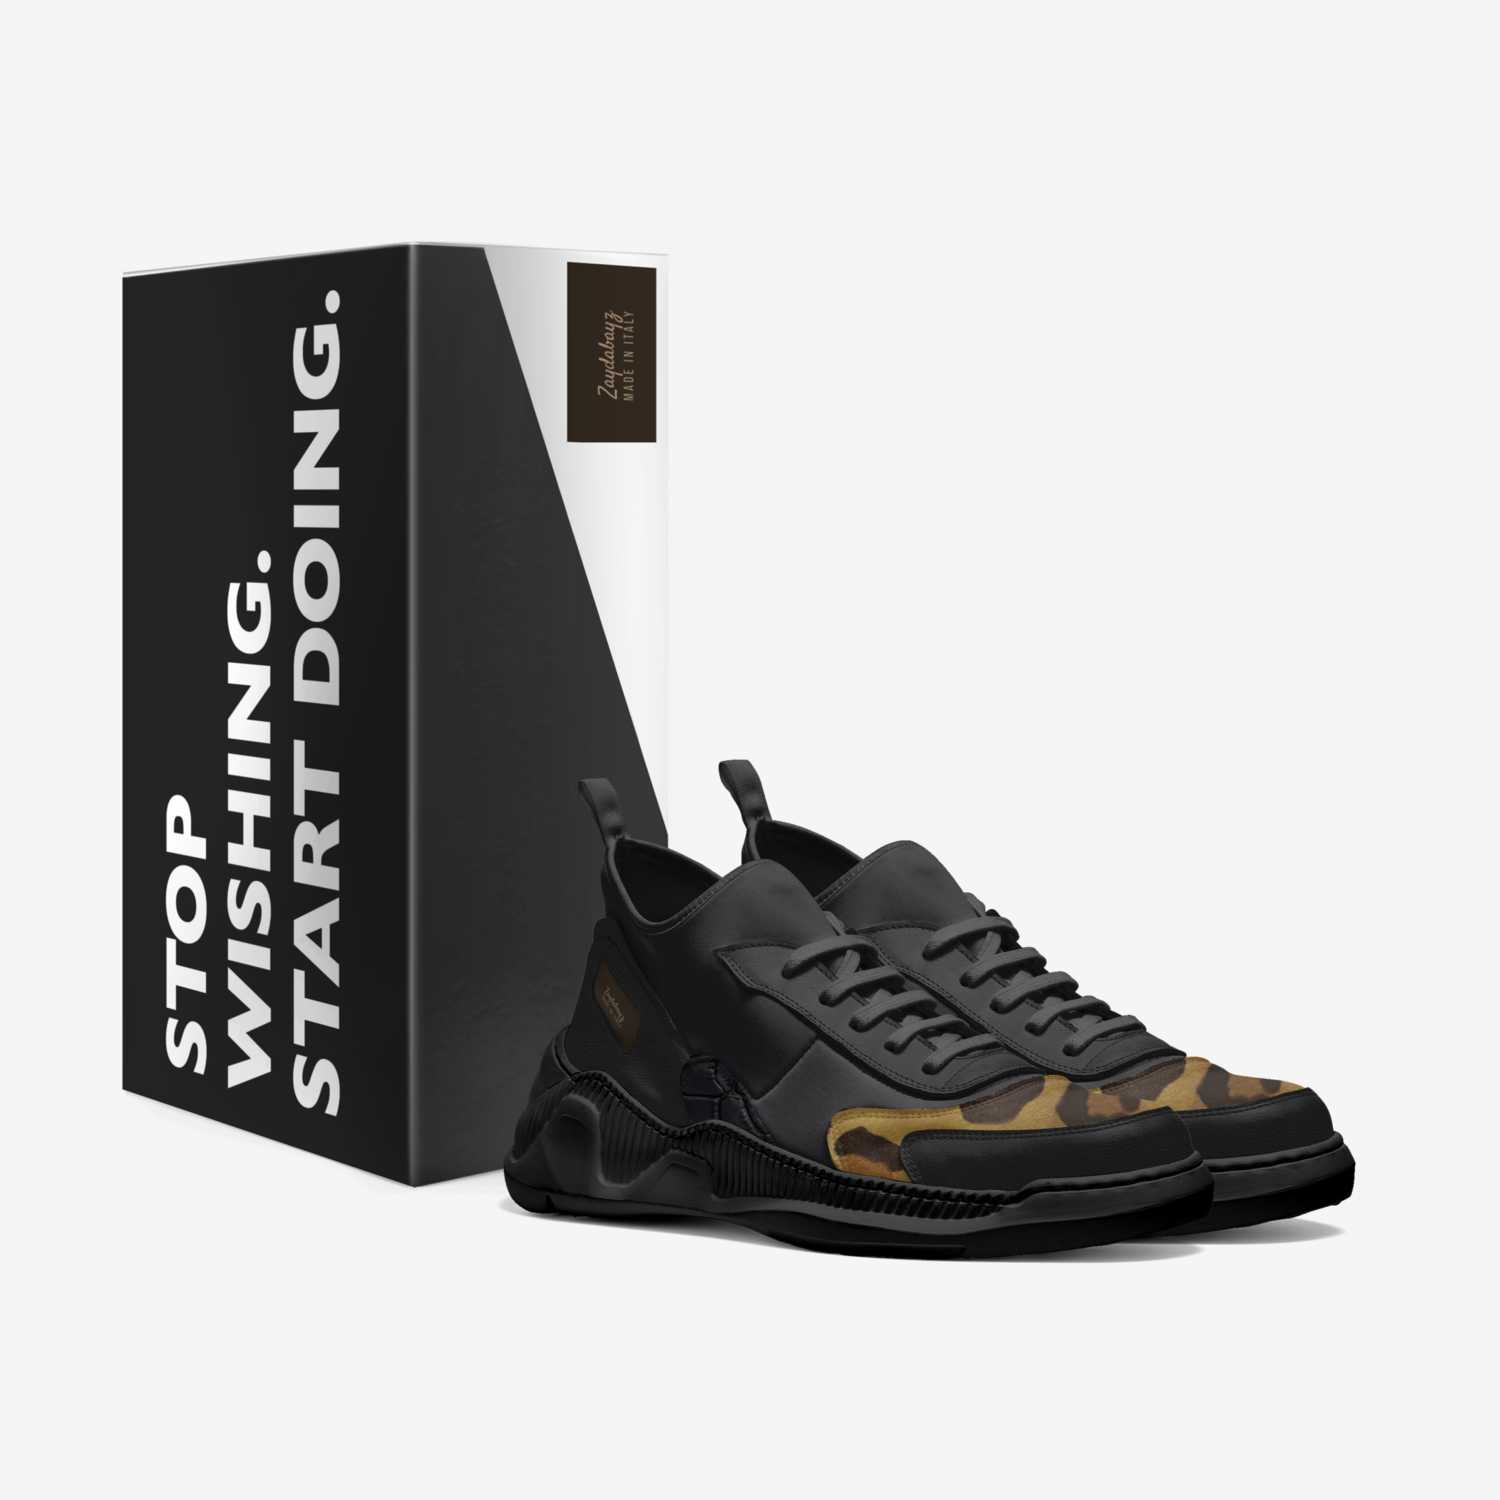 Zaydabayz custom made in Italy shoes by Isaiah Howard | Box view